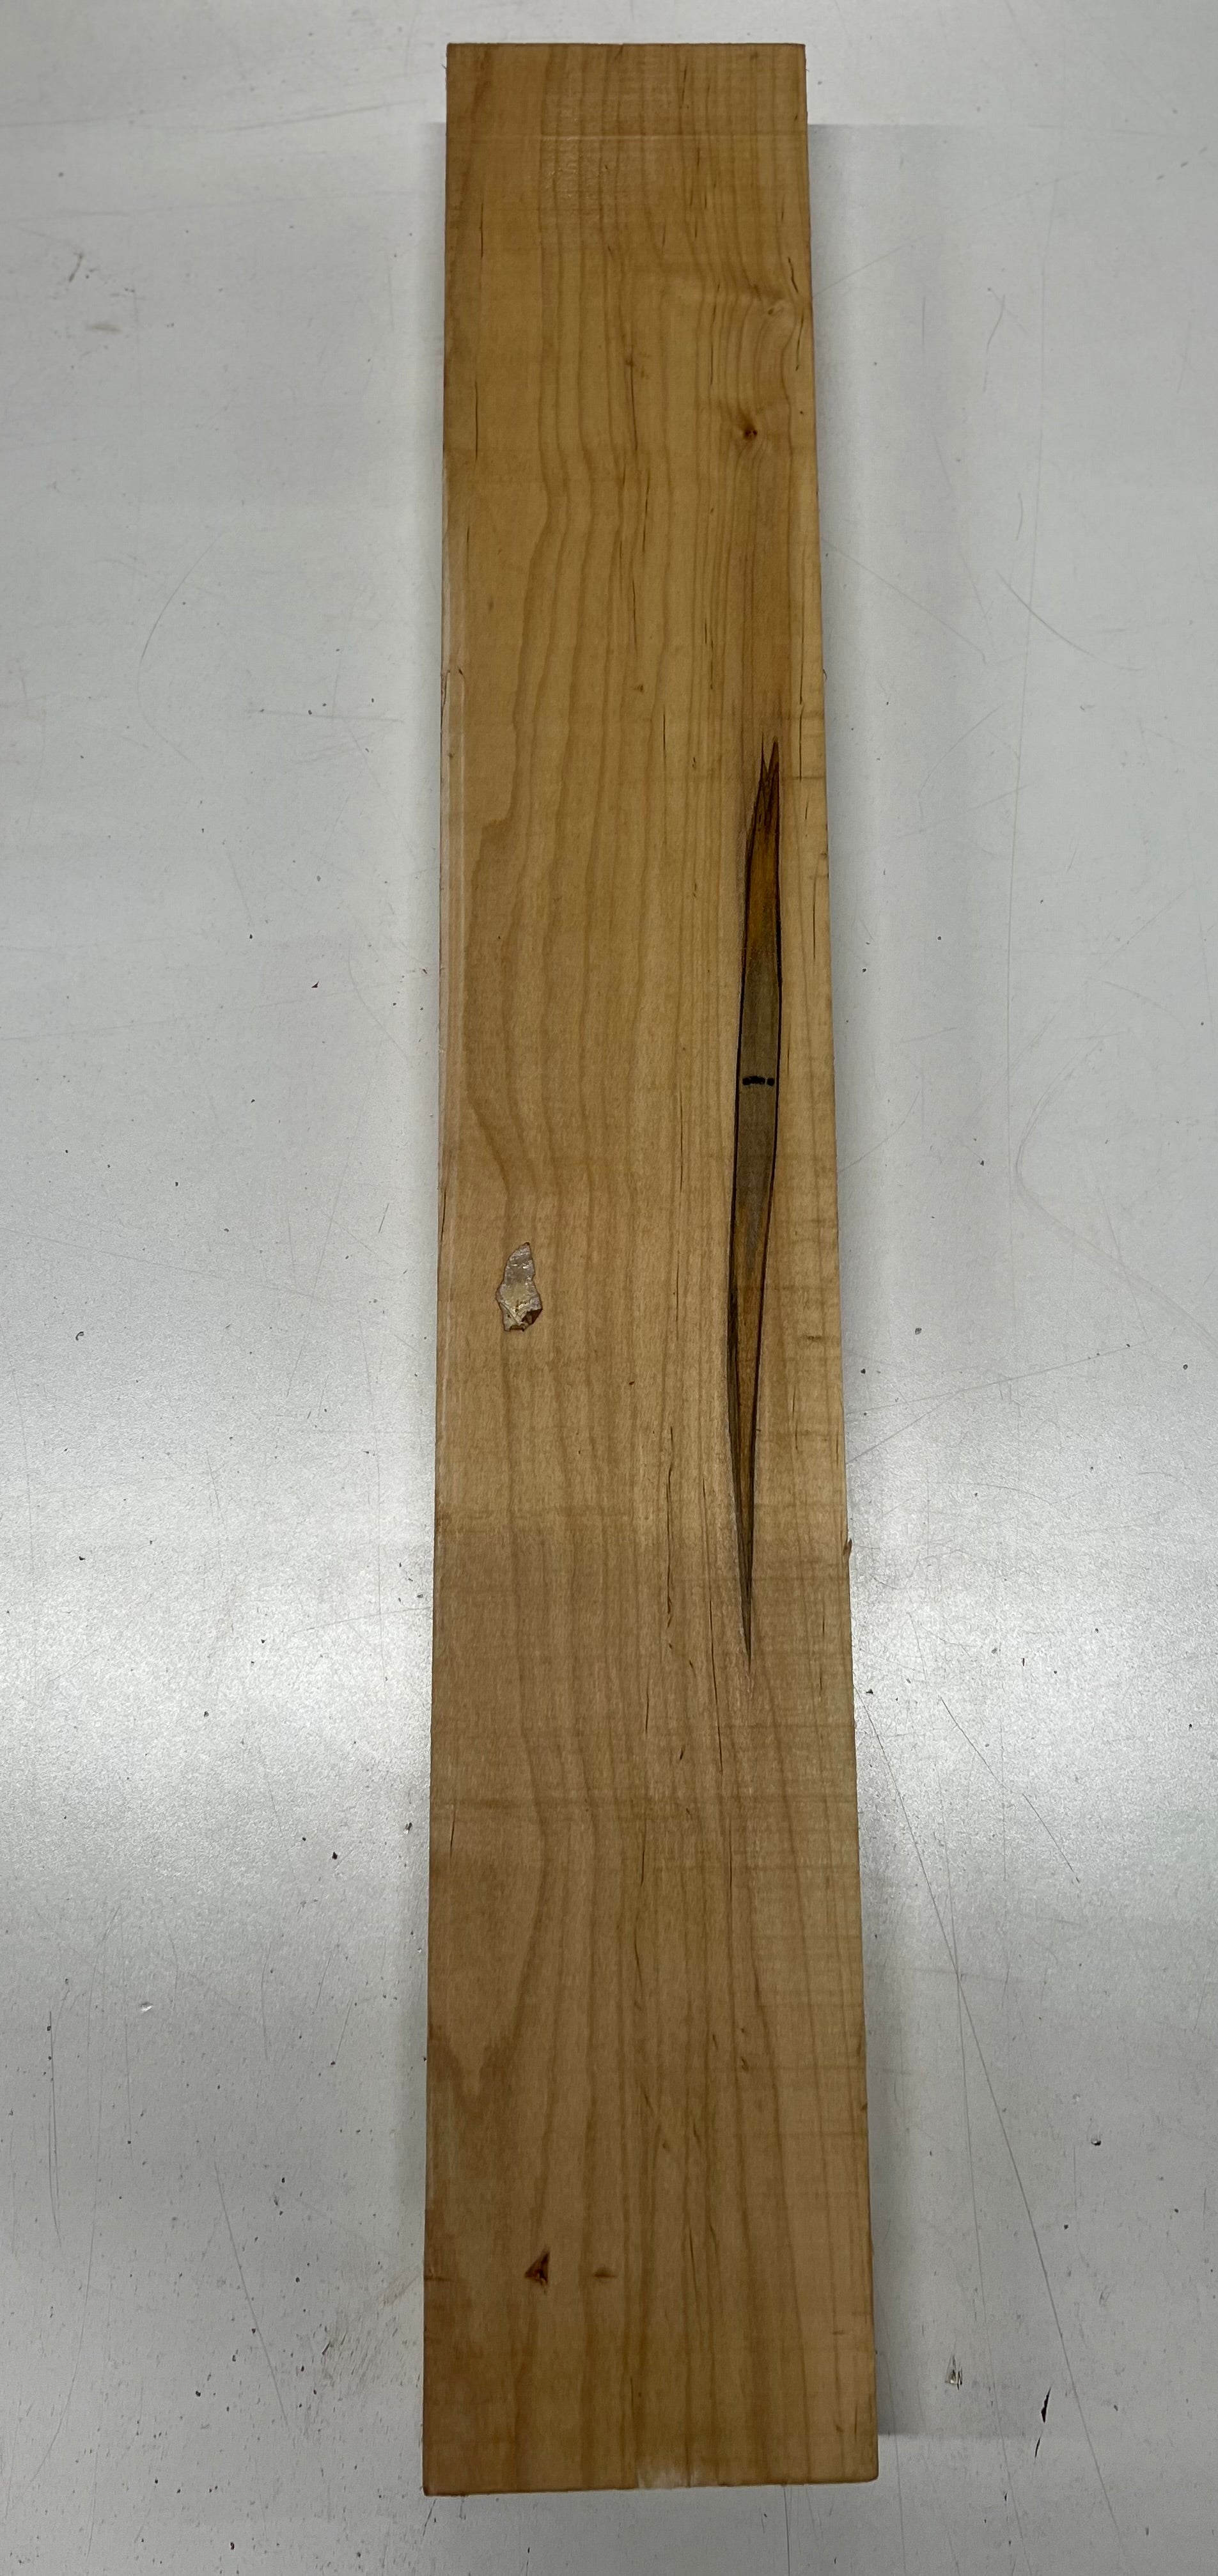 Ambrosia Maple Lumber Board Wood Blank 28&quot;x 4-1/2&quot;x 1-5/8&quot; 